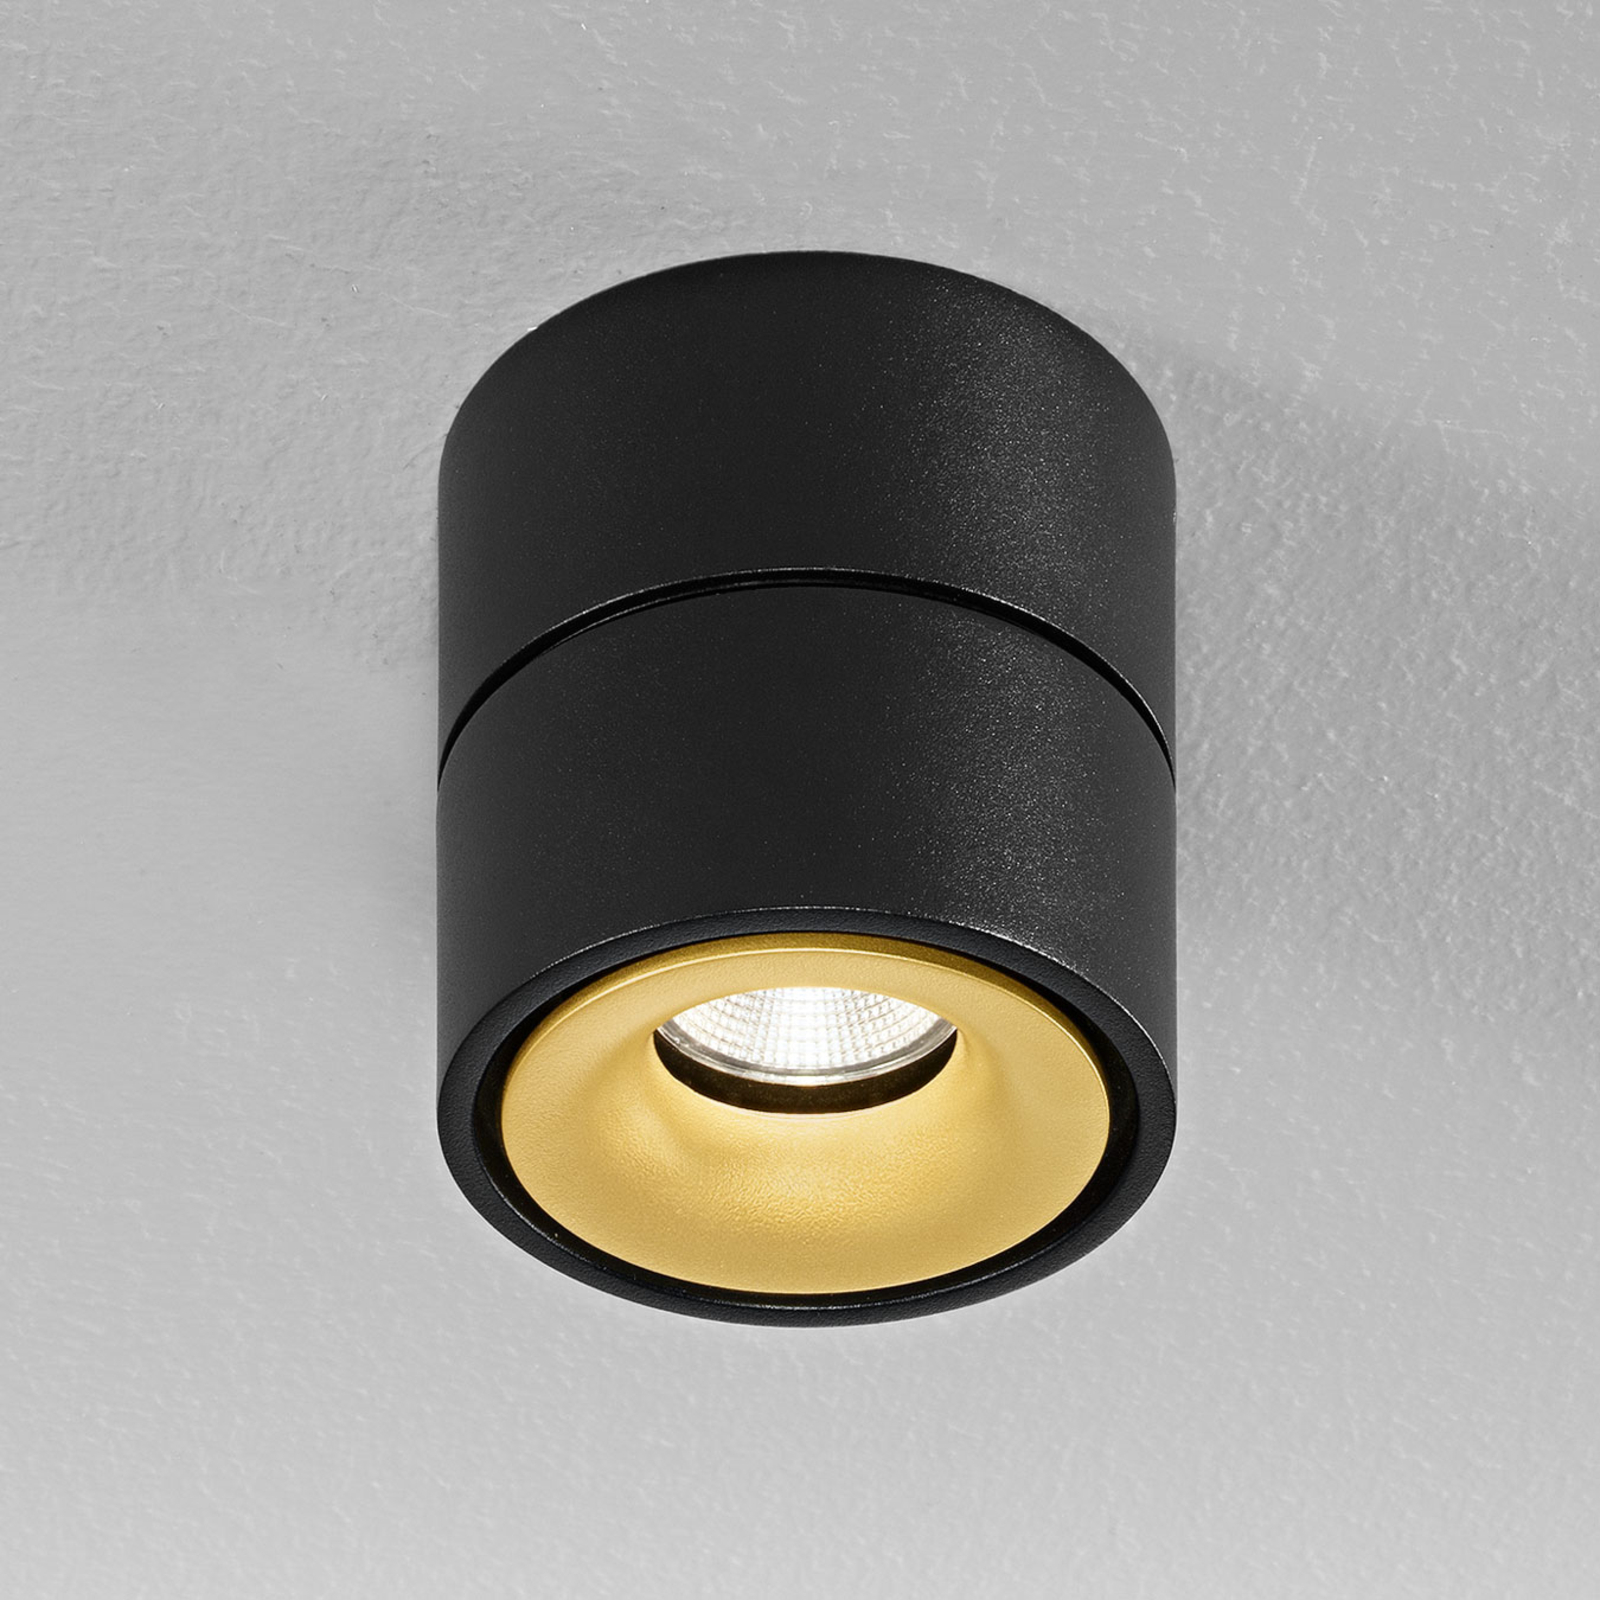 Egger Clippo spot plafond LED, noir-doré, 2 700 K